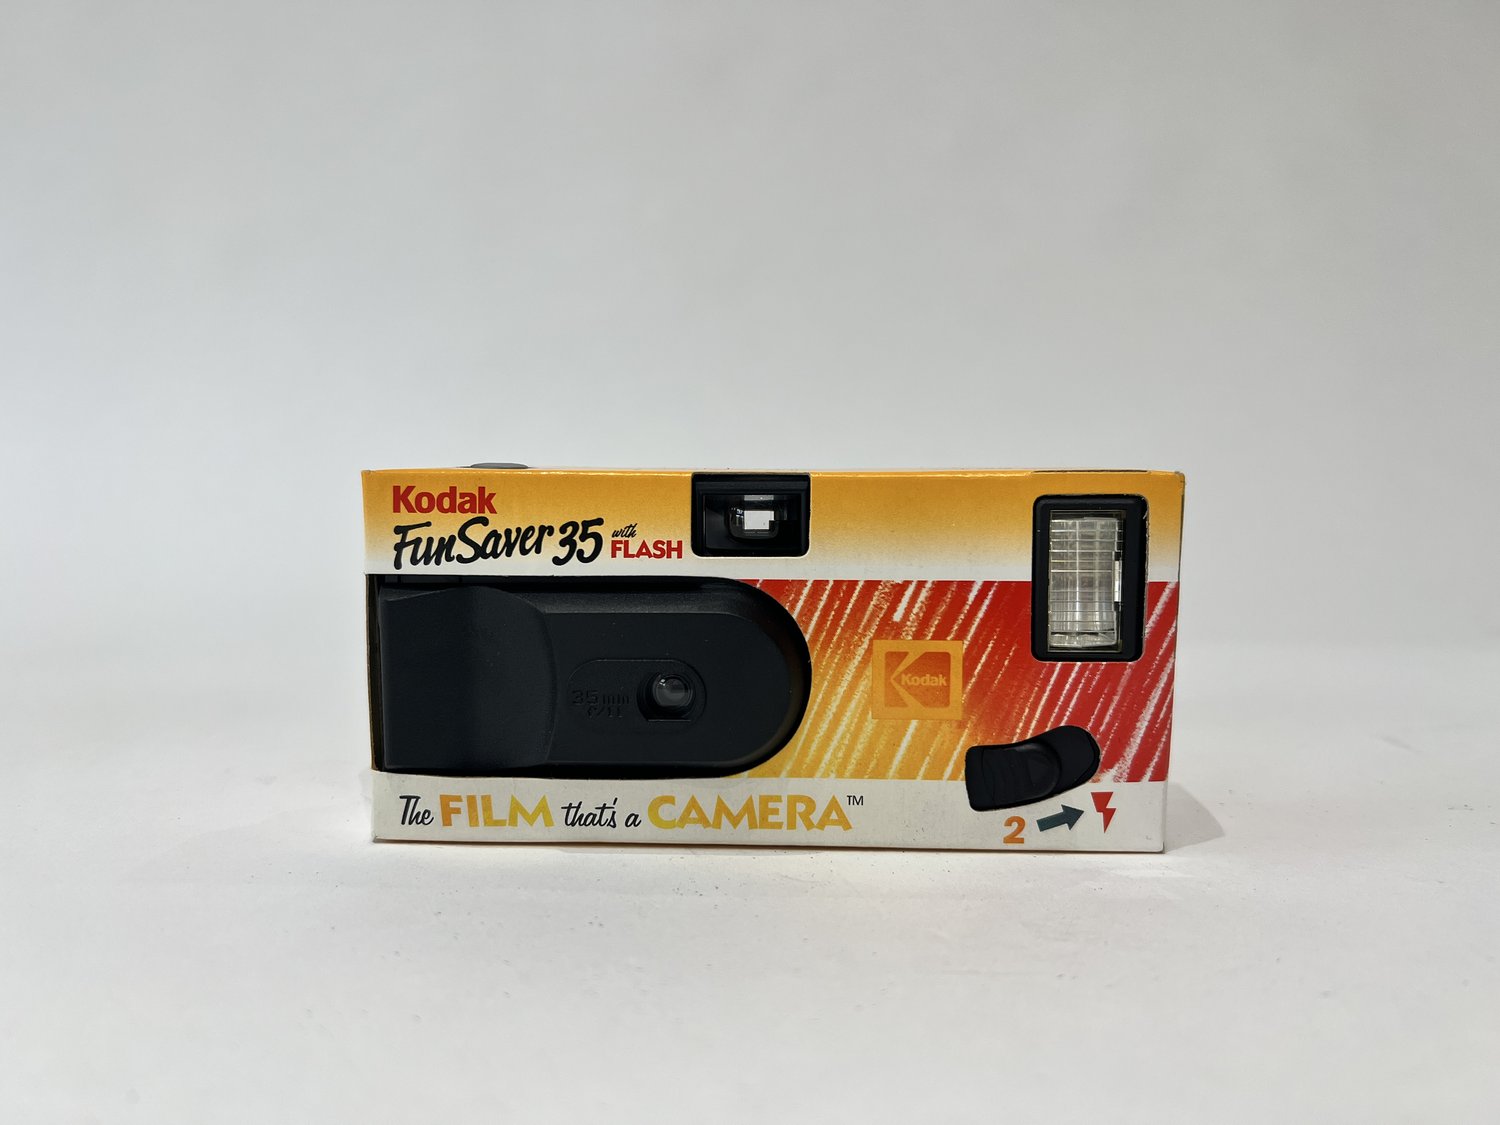 Kodak FunSaver 35 Disposable — yours